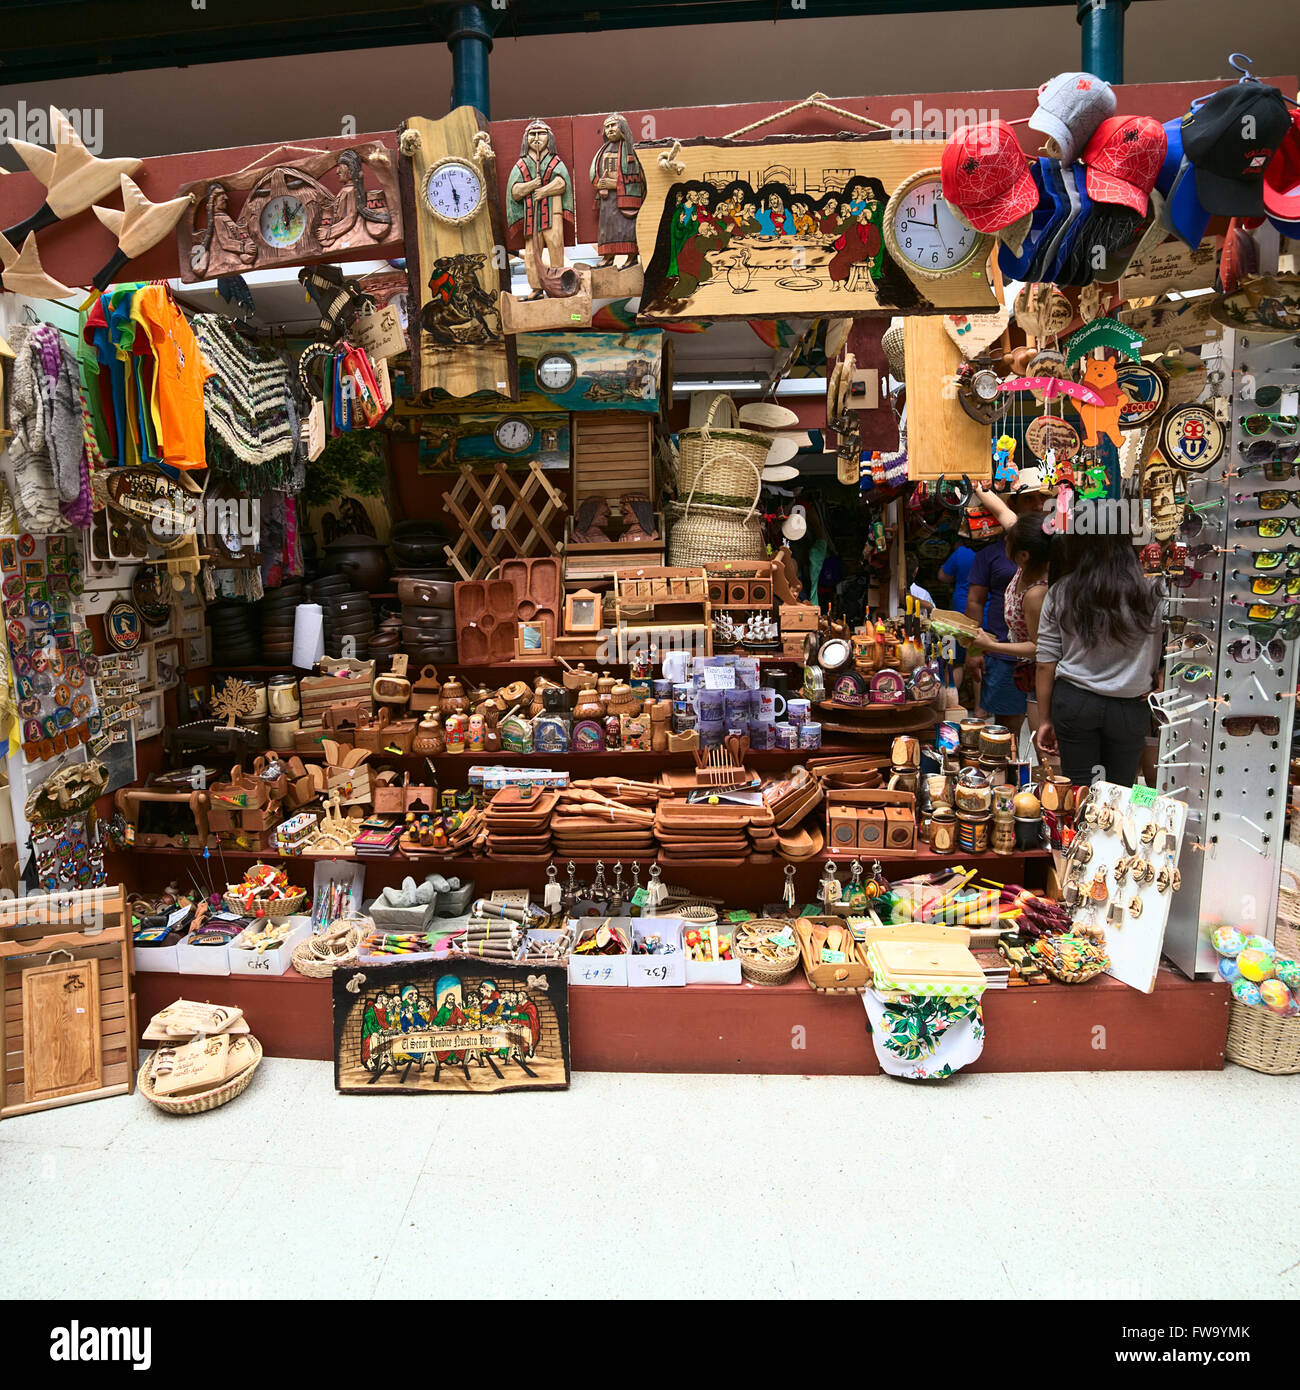 VALDIVIA, CHILE - FEBRUARY 3, 2016: Small shop selling handicrafts and souvenirs in the Mercado Municipal (municipal market) Stock Photo